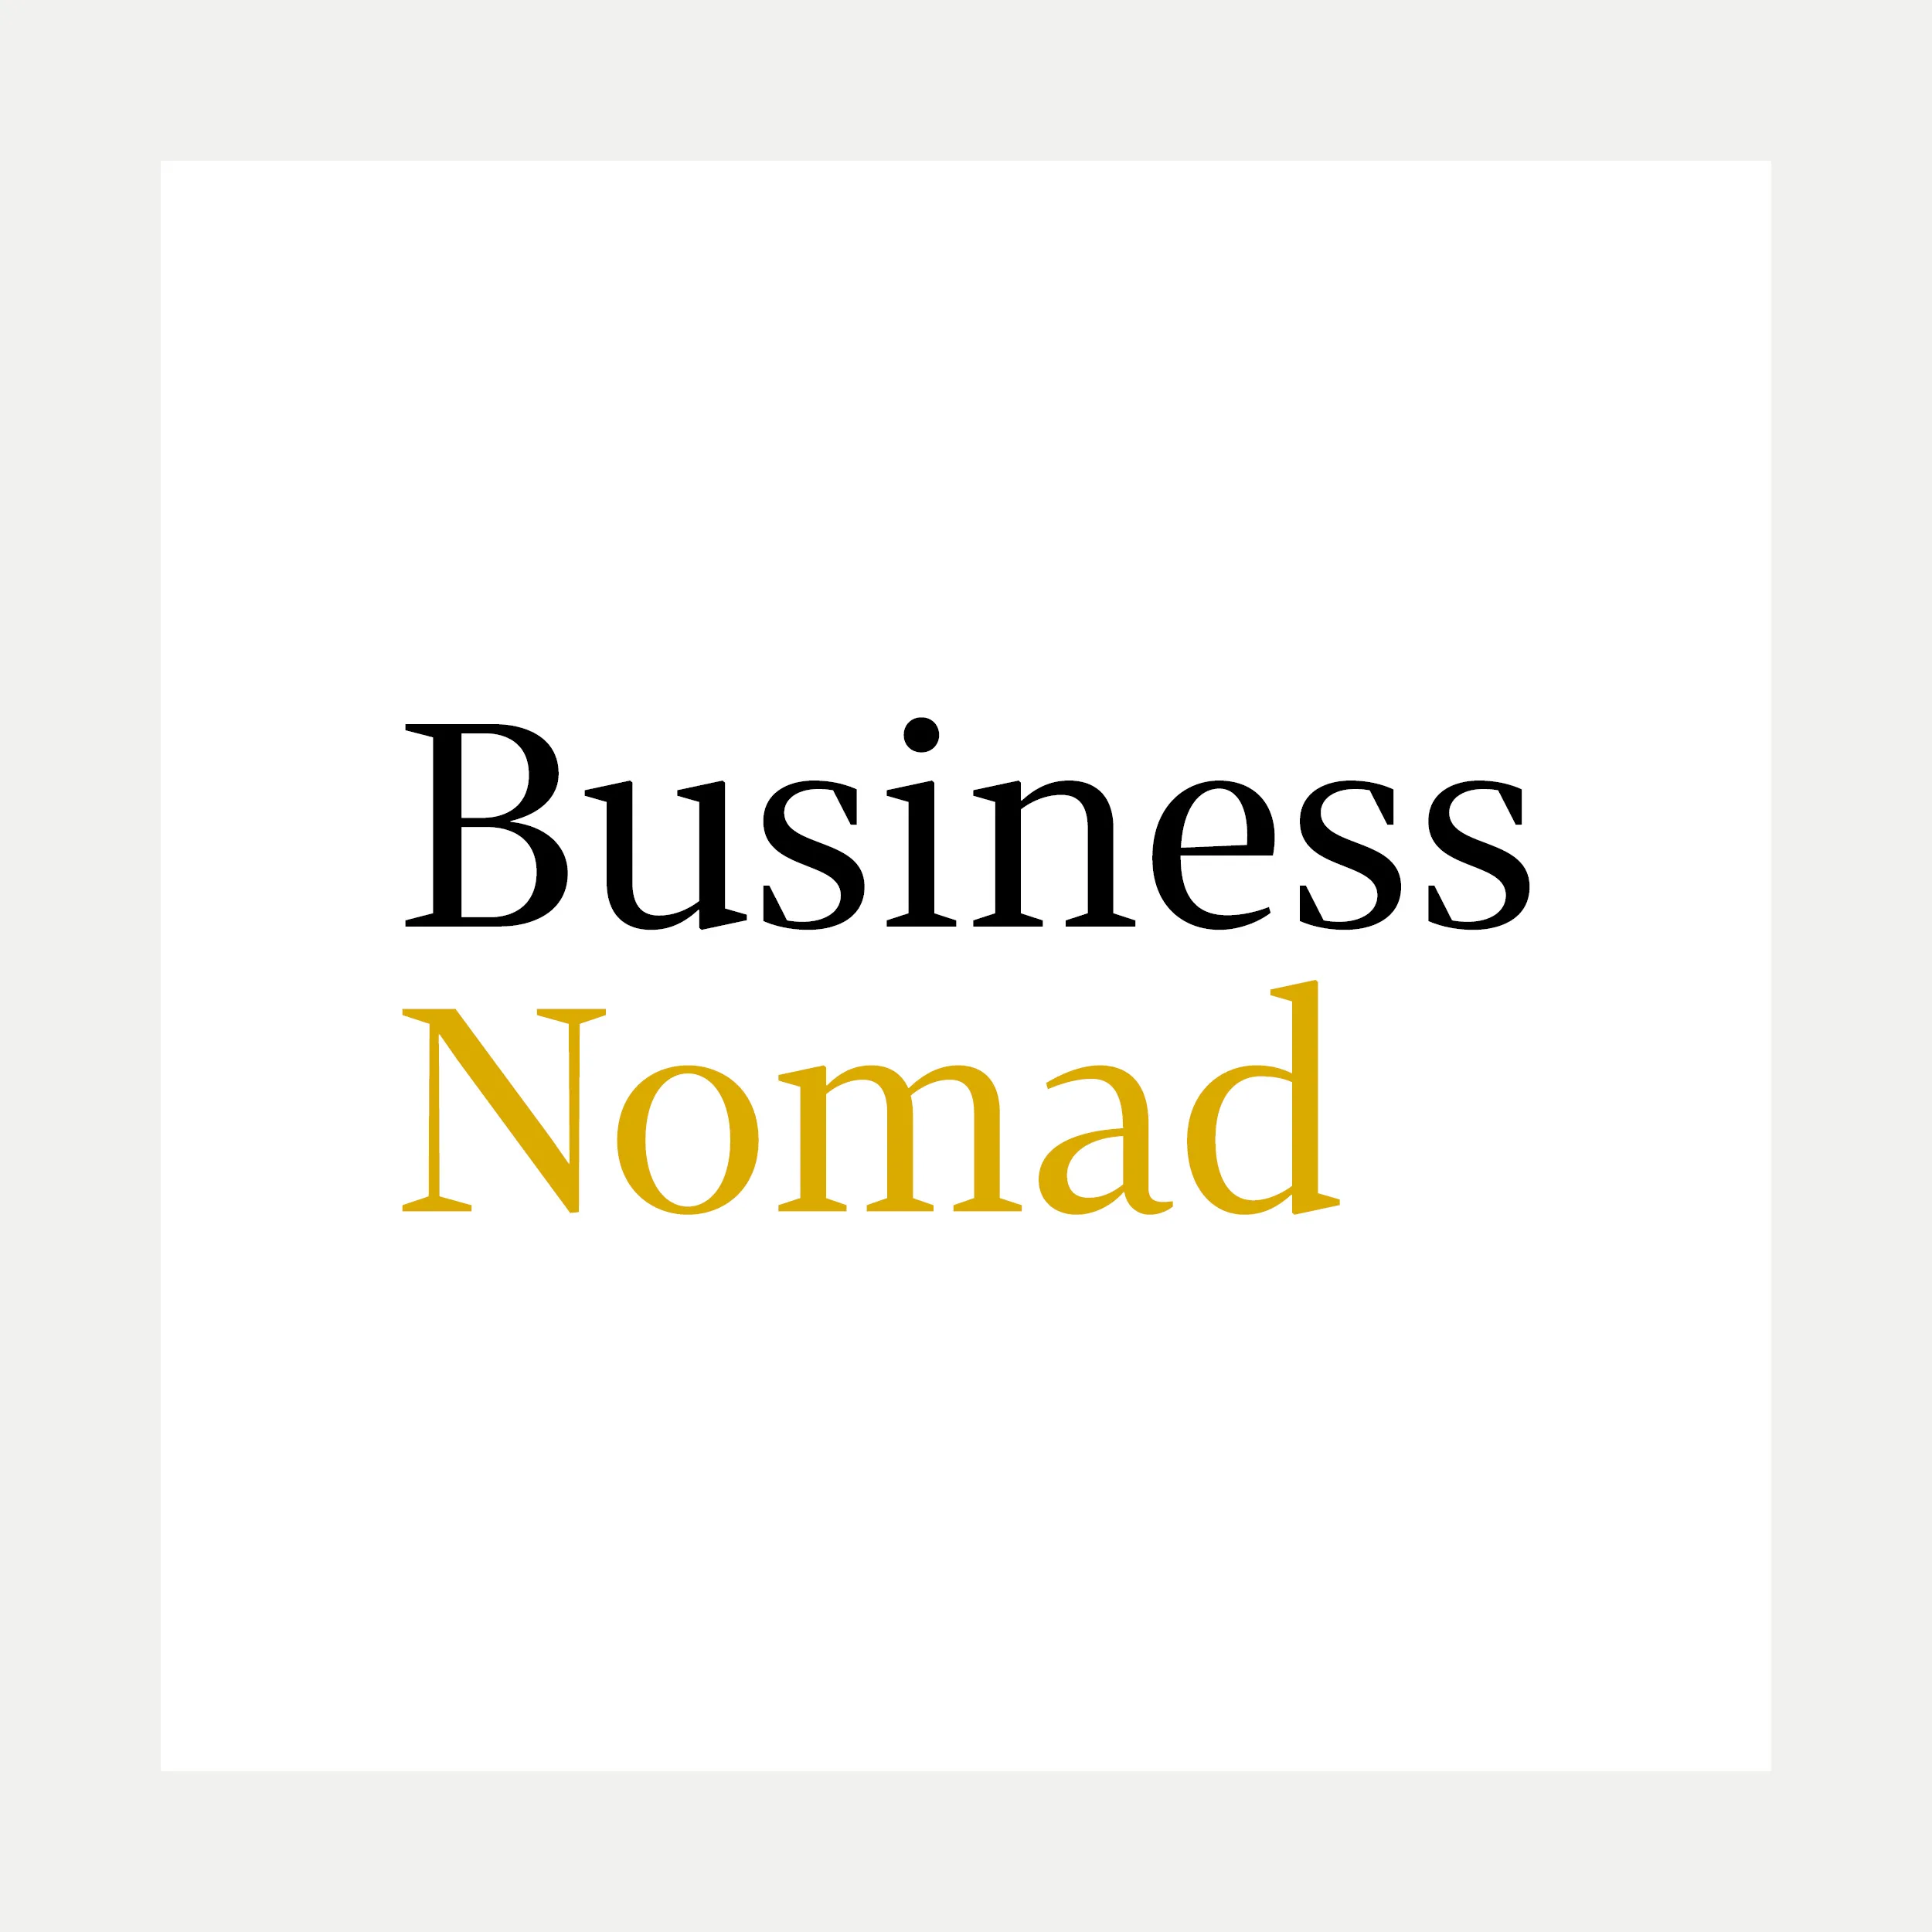 Business Nomad: Wordmark